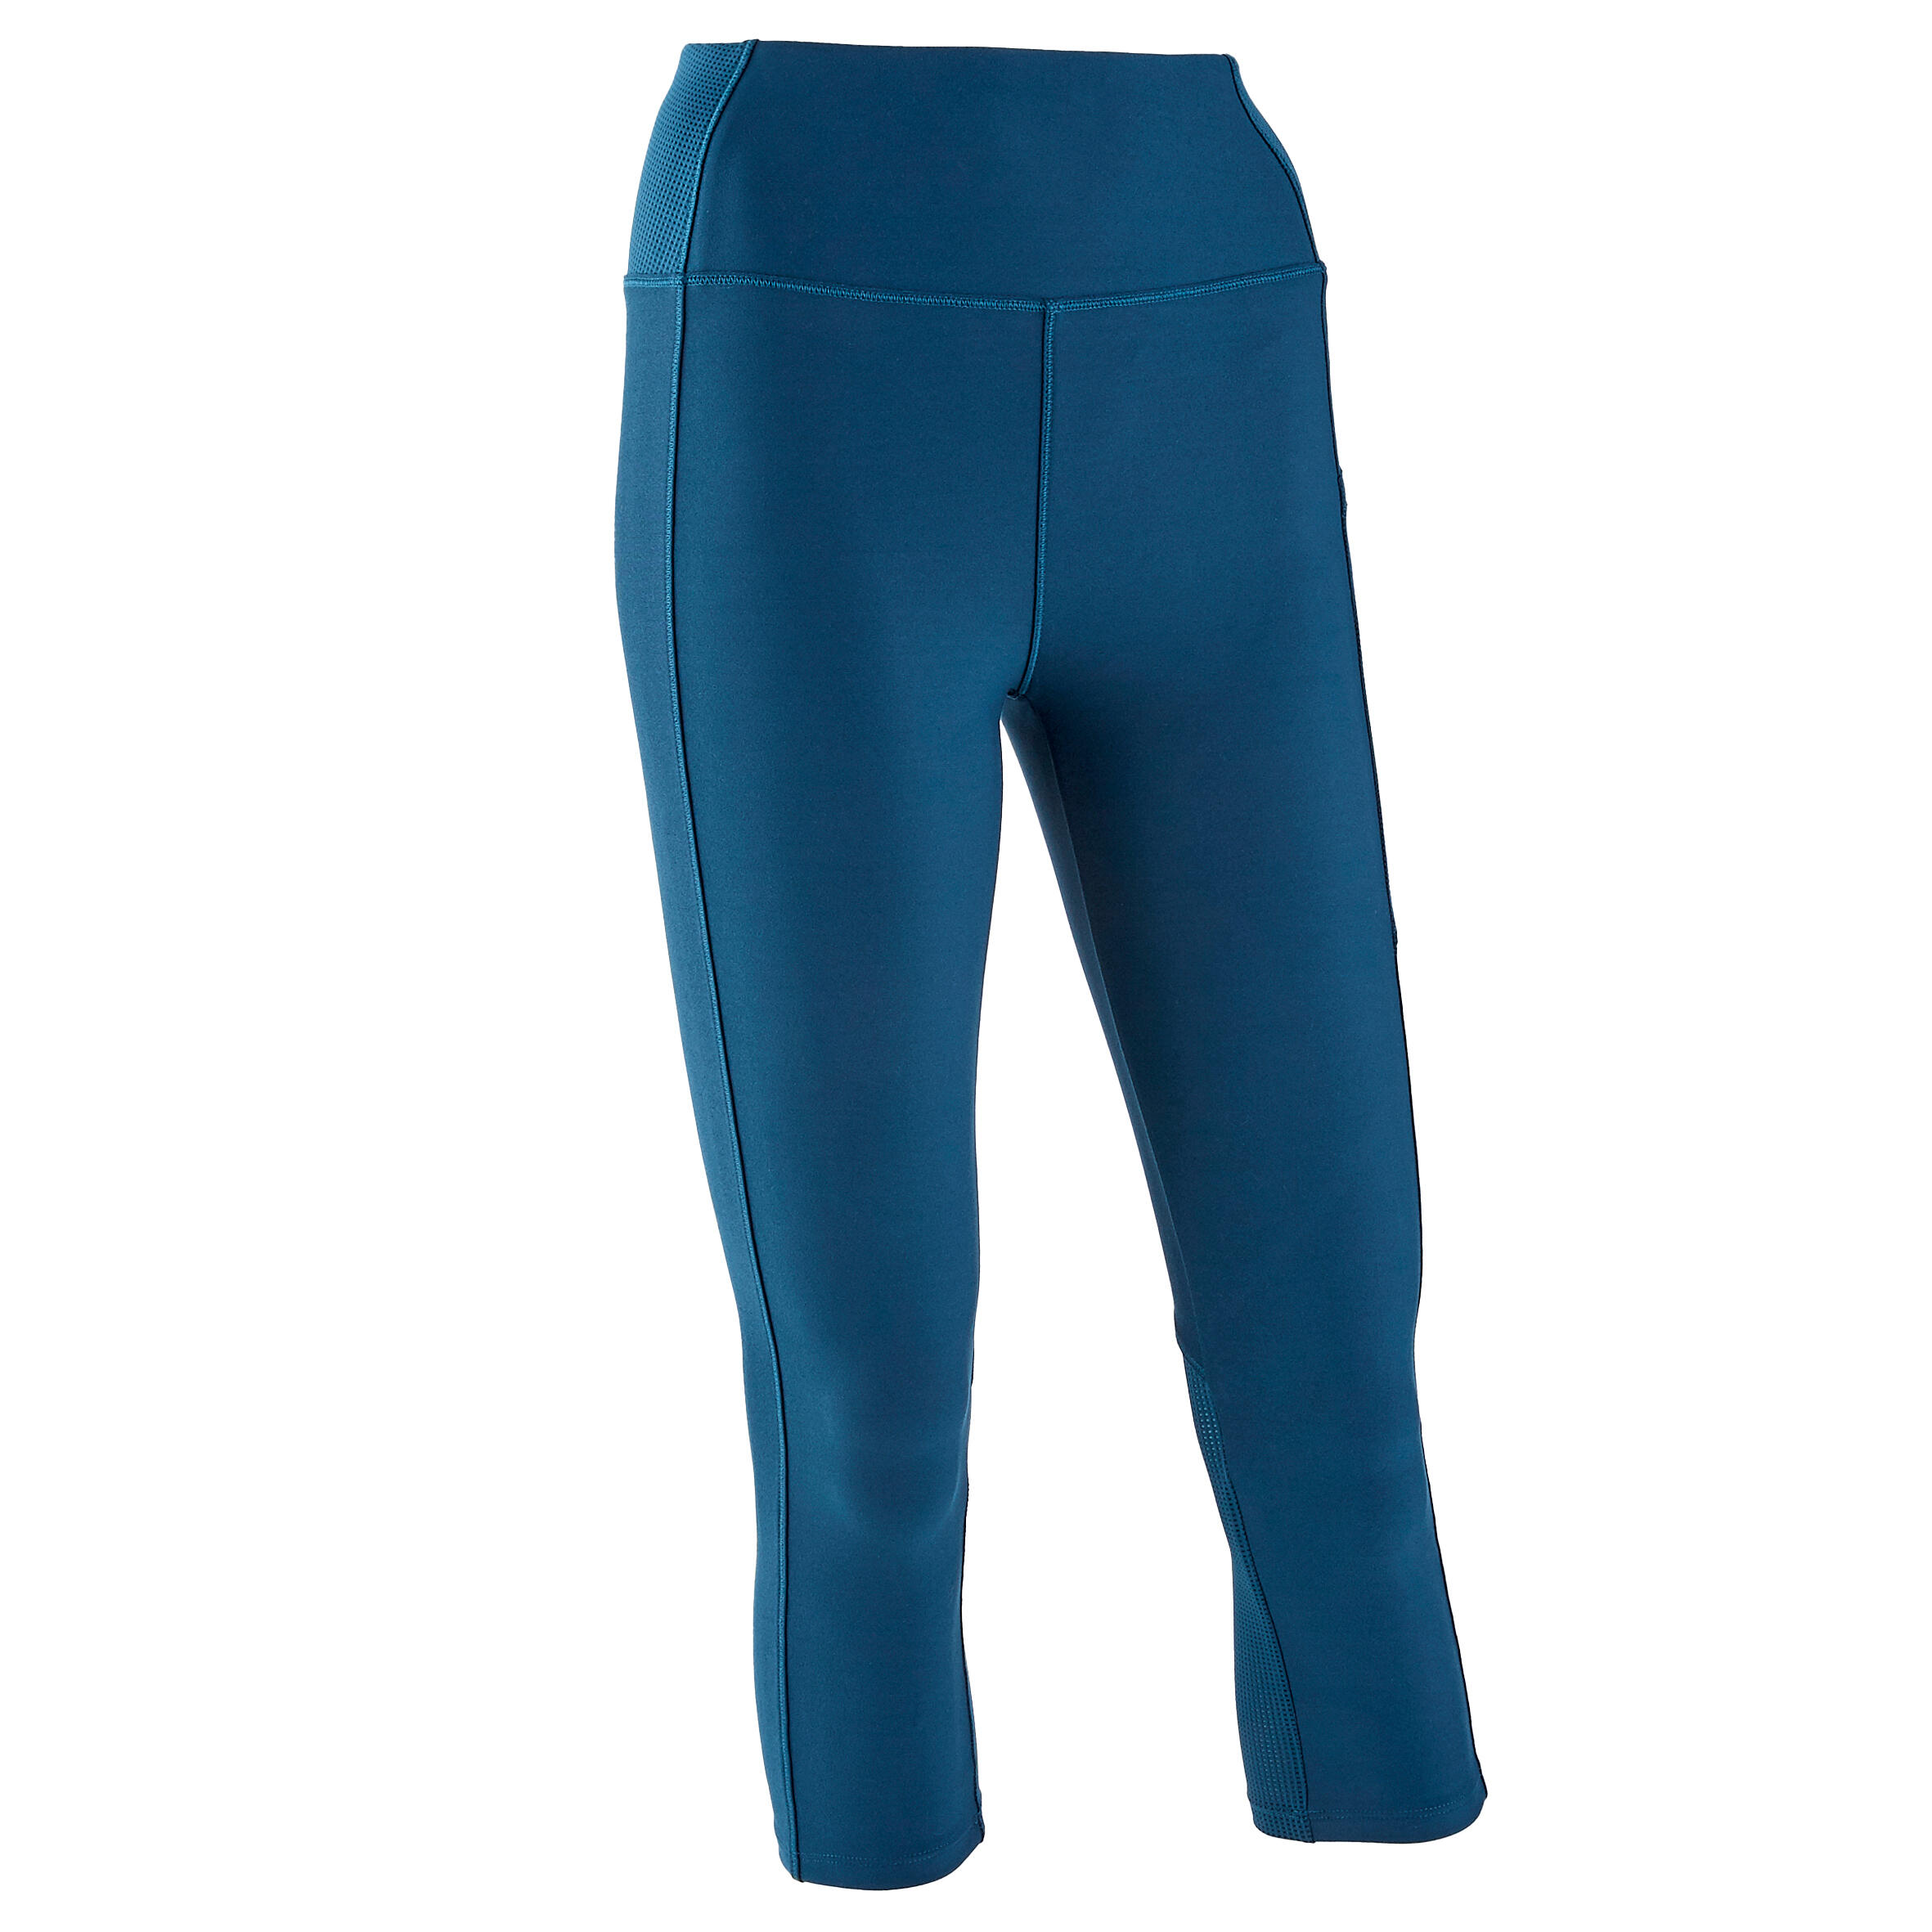 Buy PCDPR Women's Seamless Spandex Boyshort Underskirt Pant Short Leggings  (S, Royal Blue) at Amazon.in